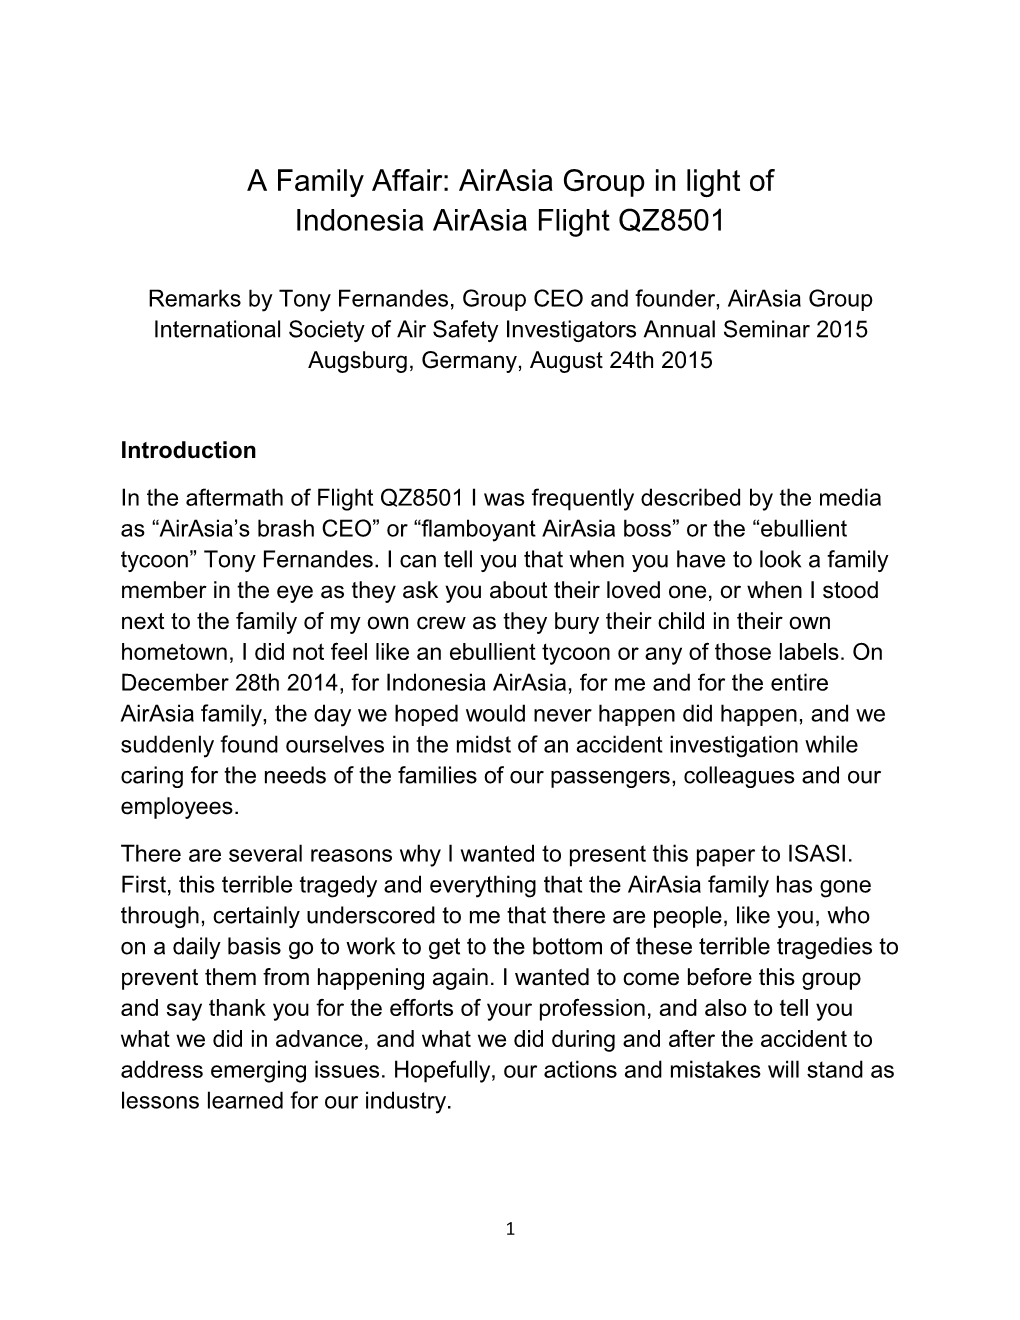 A Family Affair: Airasia Group in Light of Indonesia Airasia Flight QZ8501